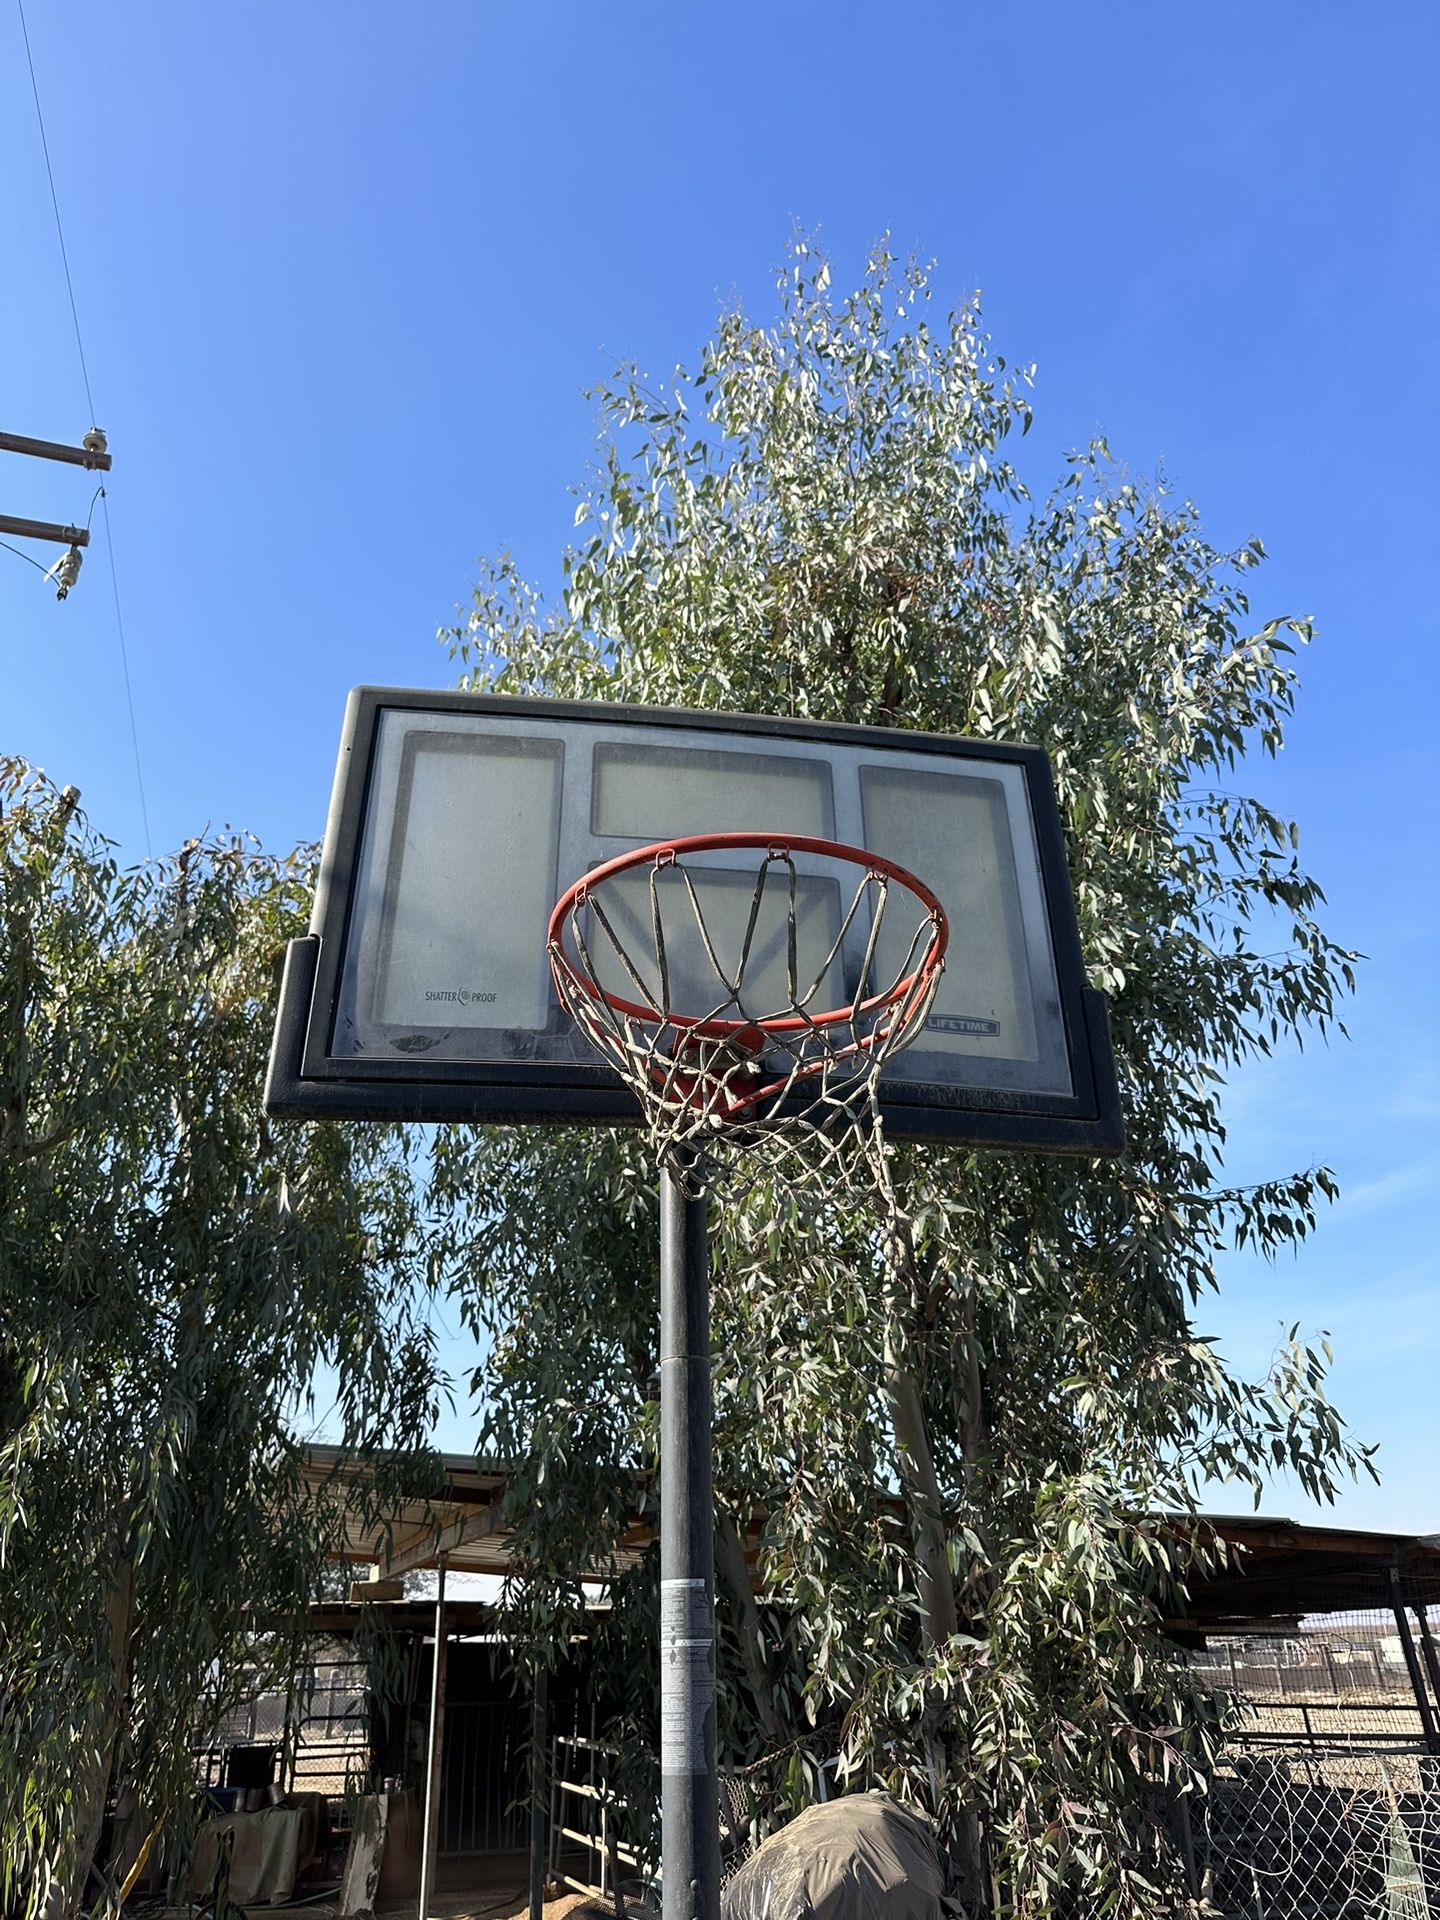 Lifetime Portable Basketball Hoop 